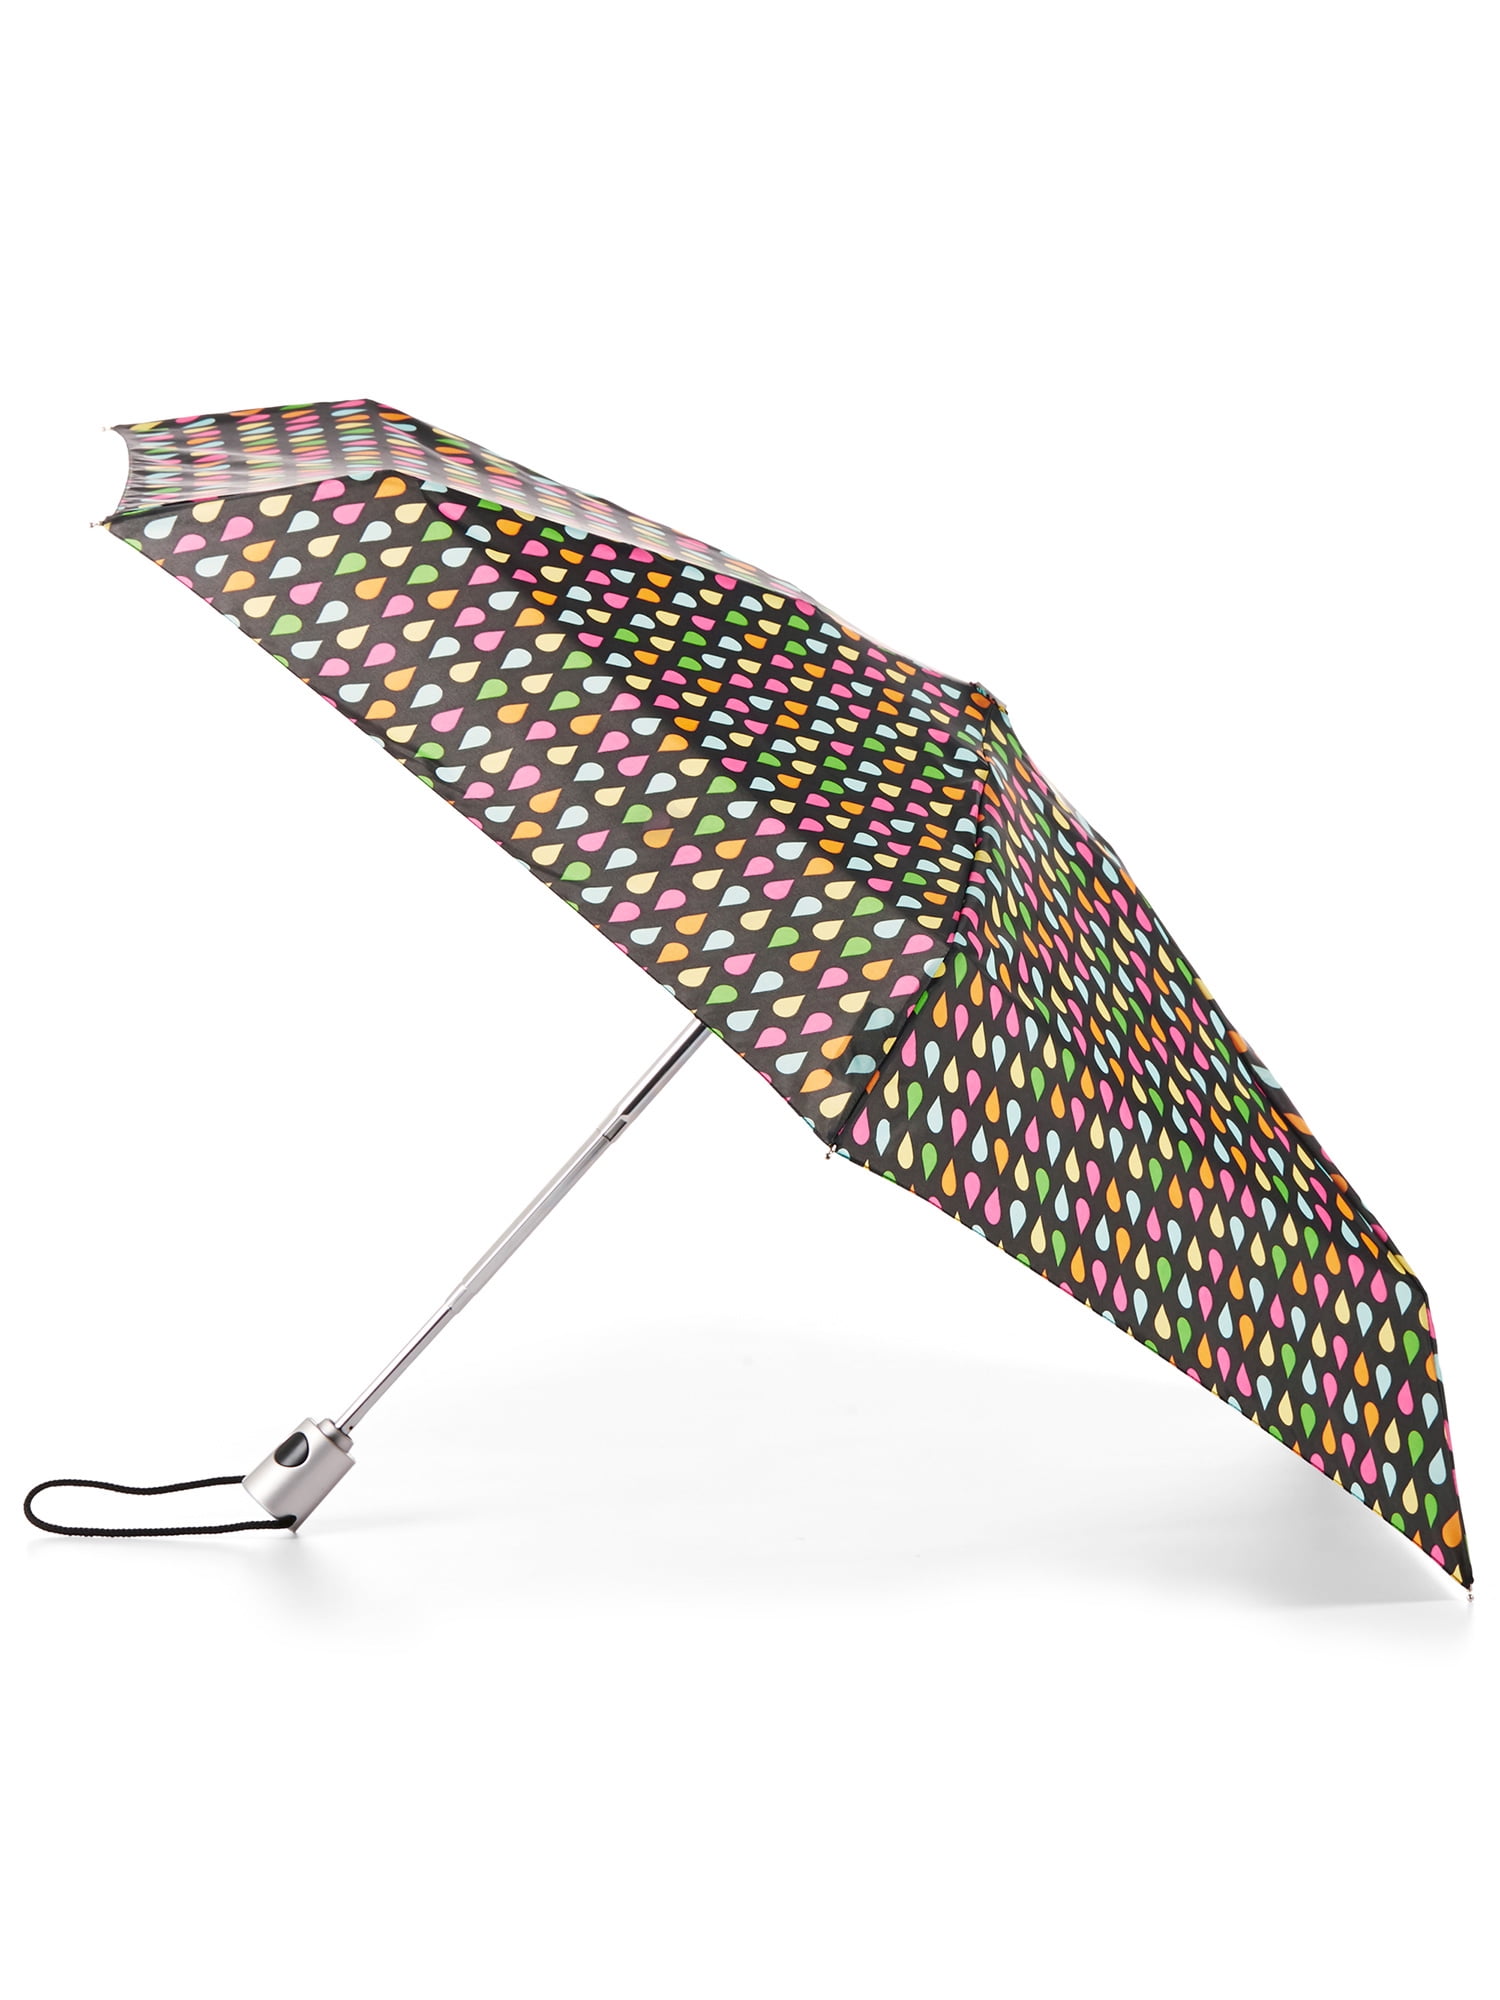 Jacksome Cookie Travel Auto Open/Close Umbrella with Anti-UV Windproof Lightweight 